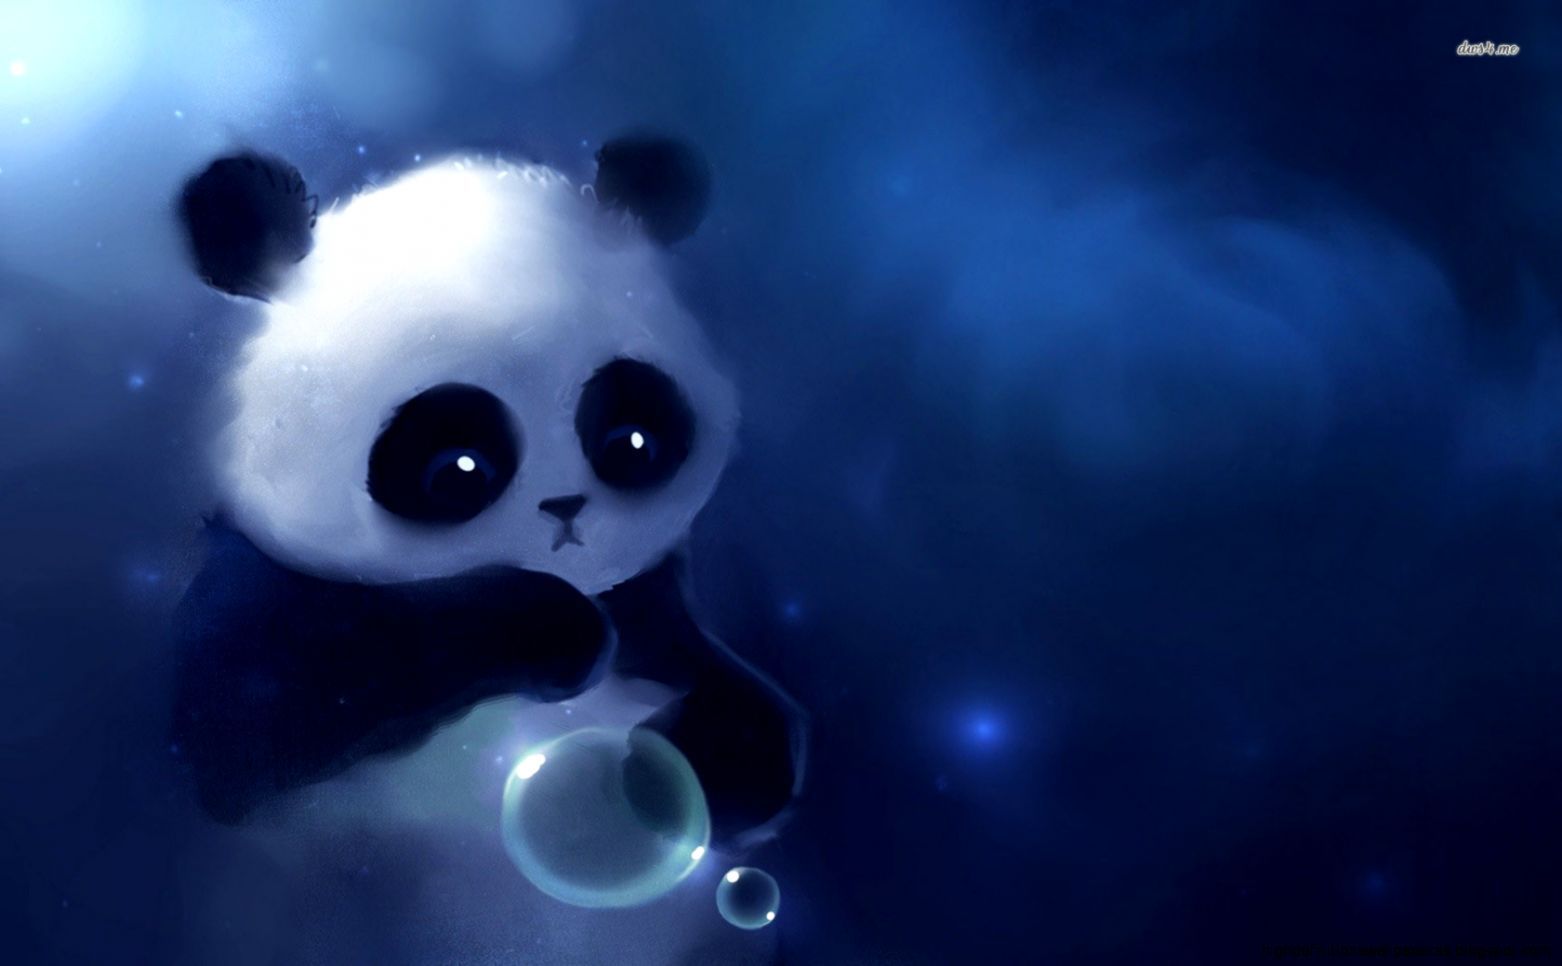 Cute Baby Panda Artwork Wallpaper. High Definitions Wallpaper